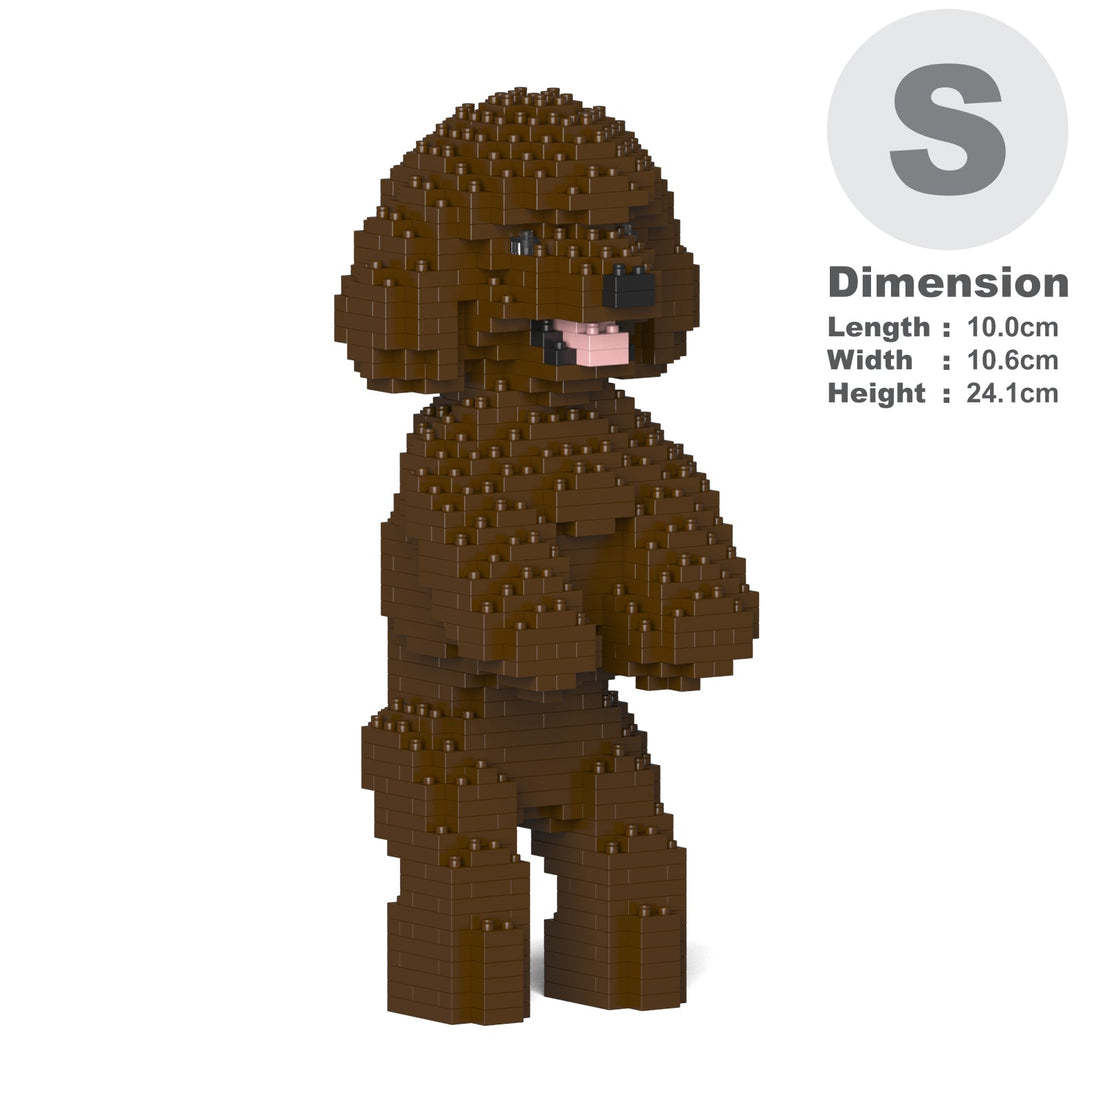 Primary image for Toy Poodle Dog Sculptures (JEKCA Lego Brick) DIY Kit